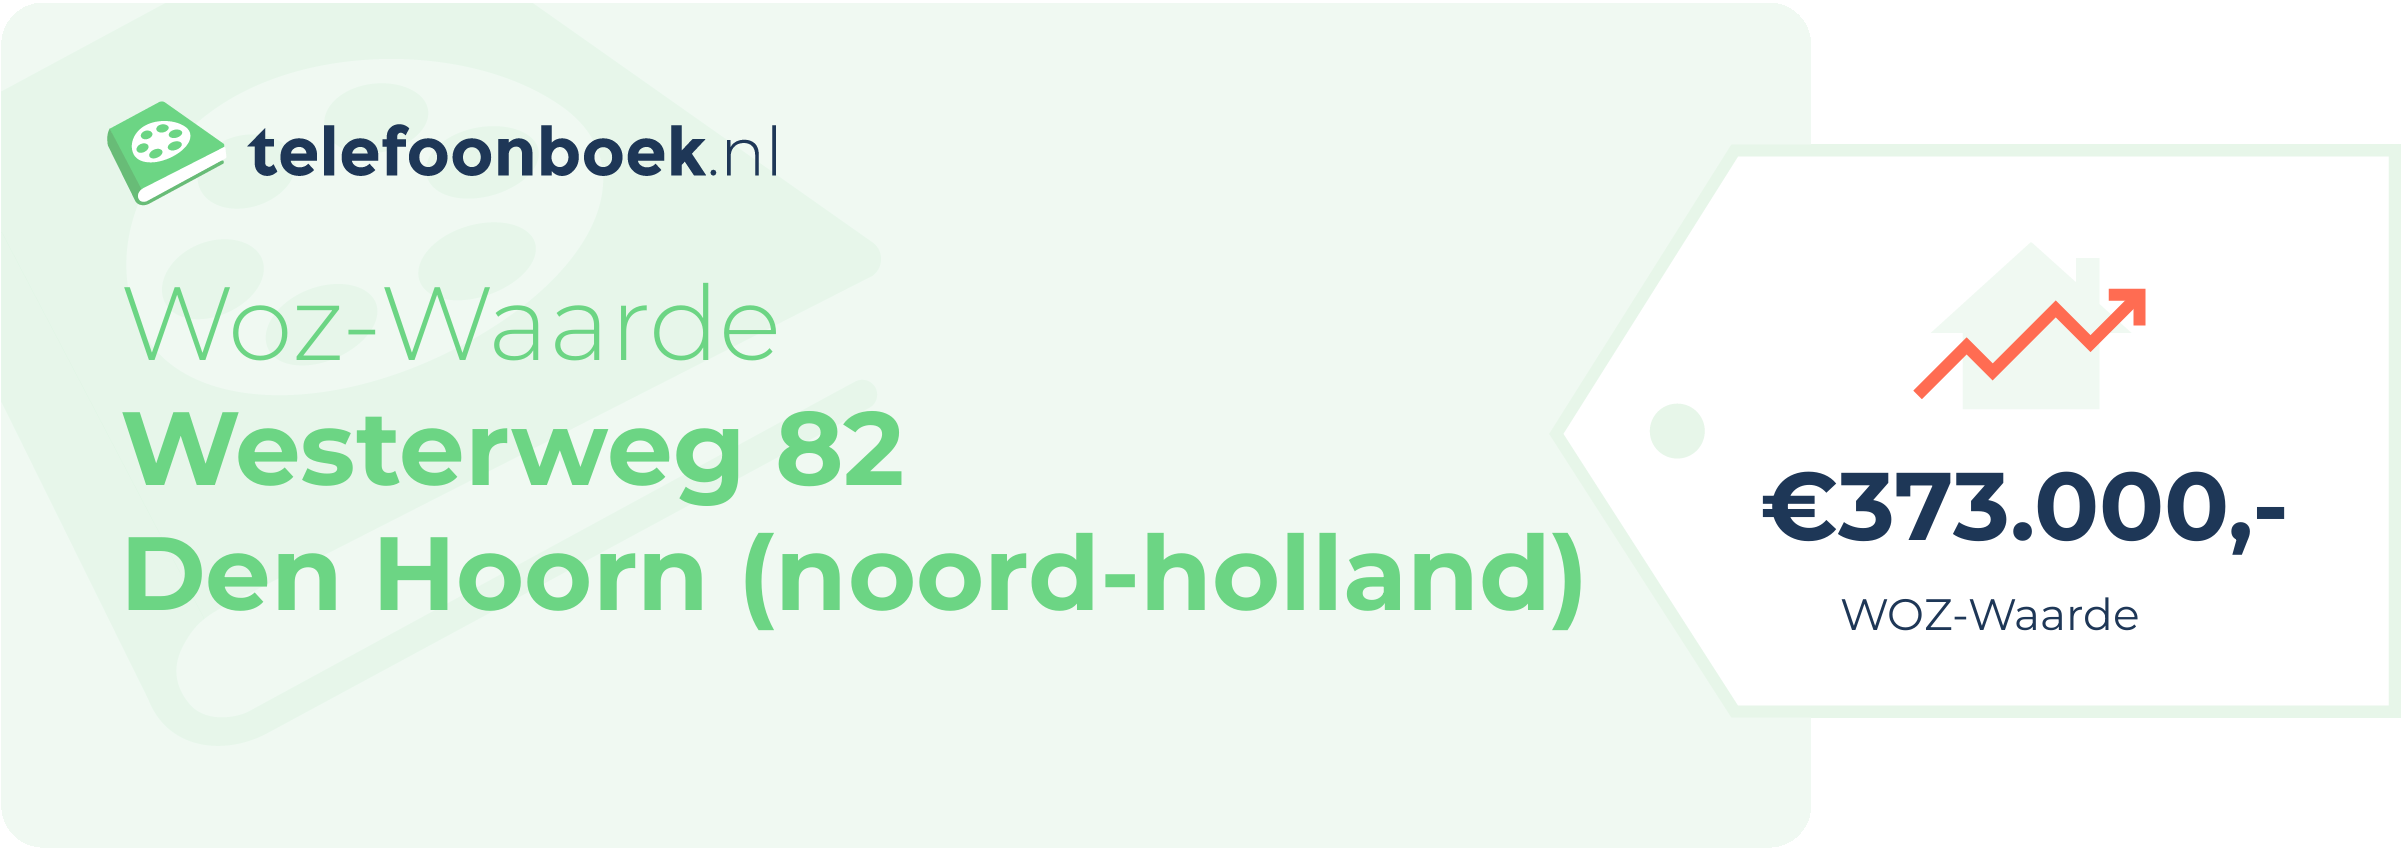 WOZ-waarde Westerweg 82 Den Hoorn (Noord-Holland)